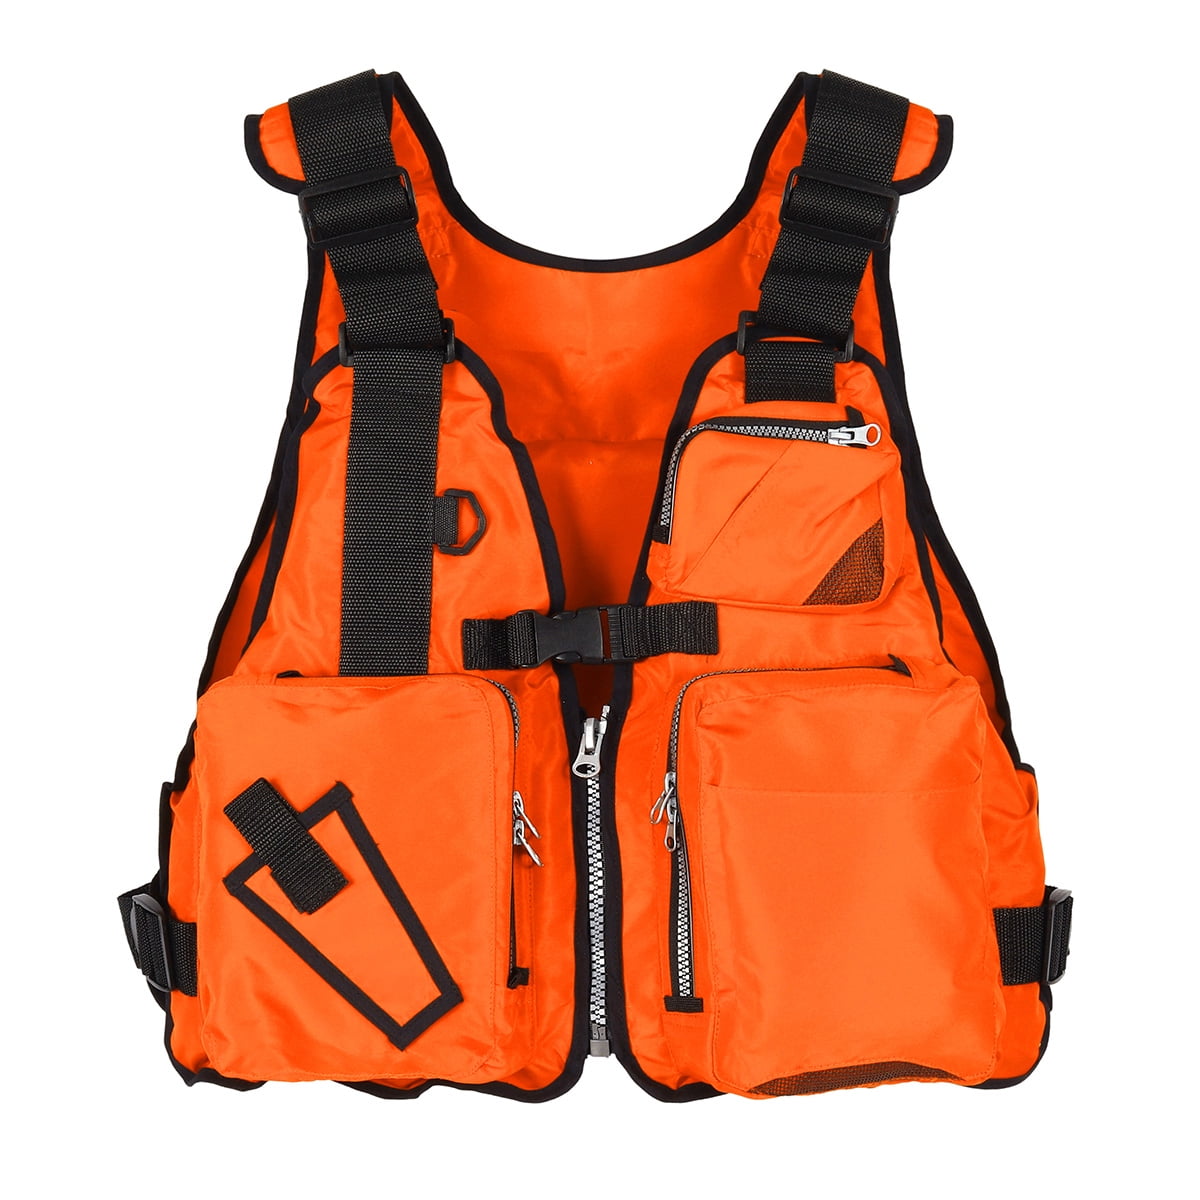 Adults Kids Life Jacket Swimming Fishing Floating Kayak Buoyancy Aid Vest JF#E 